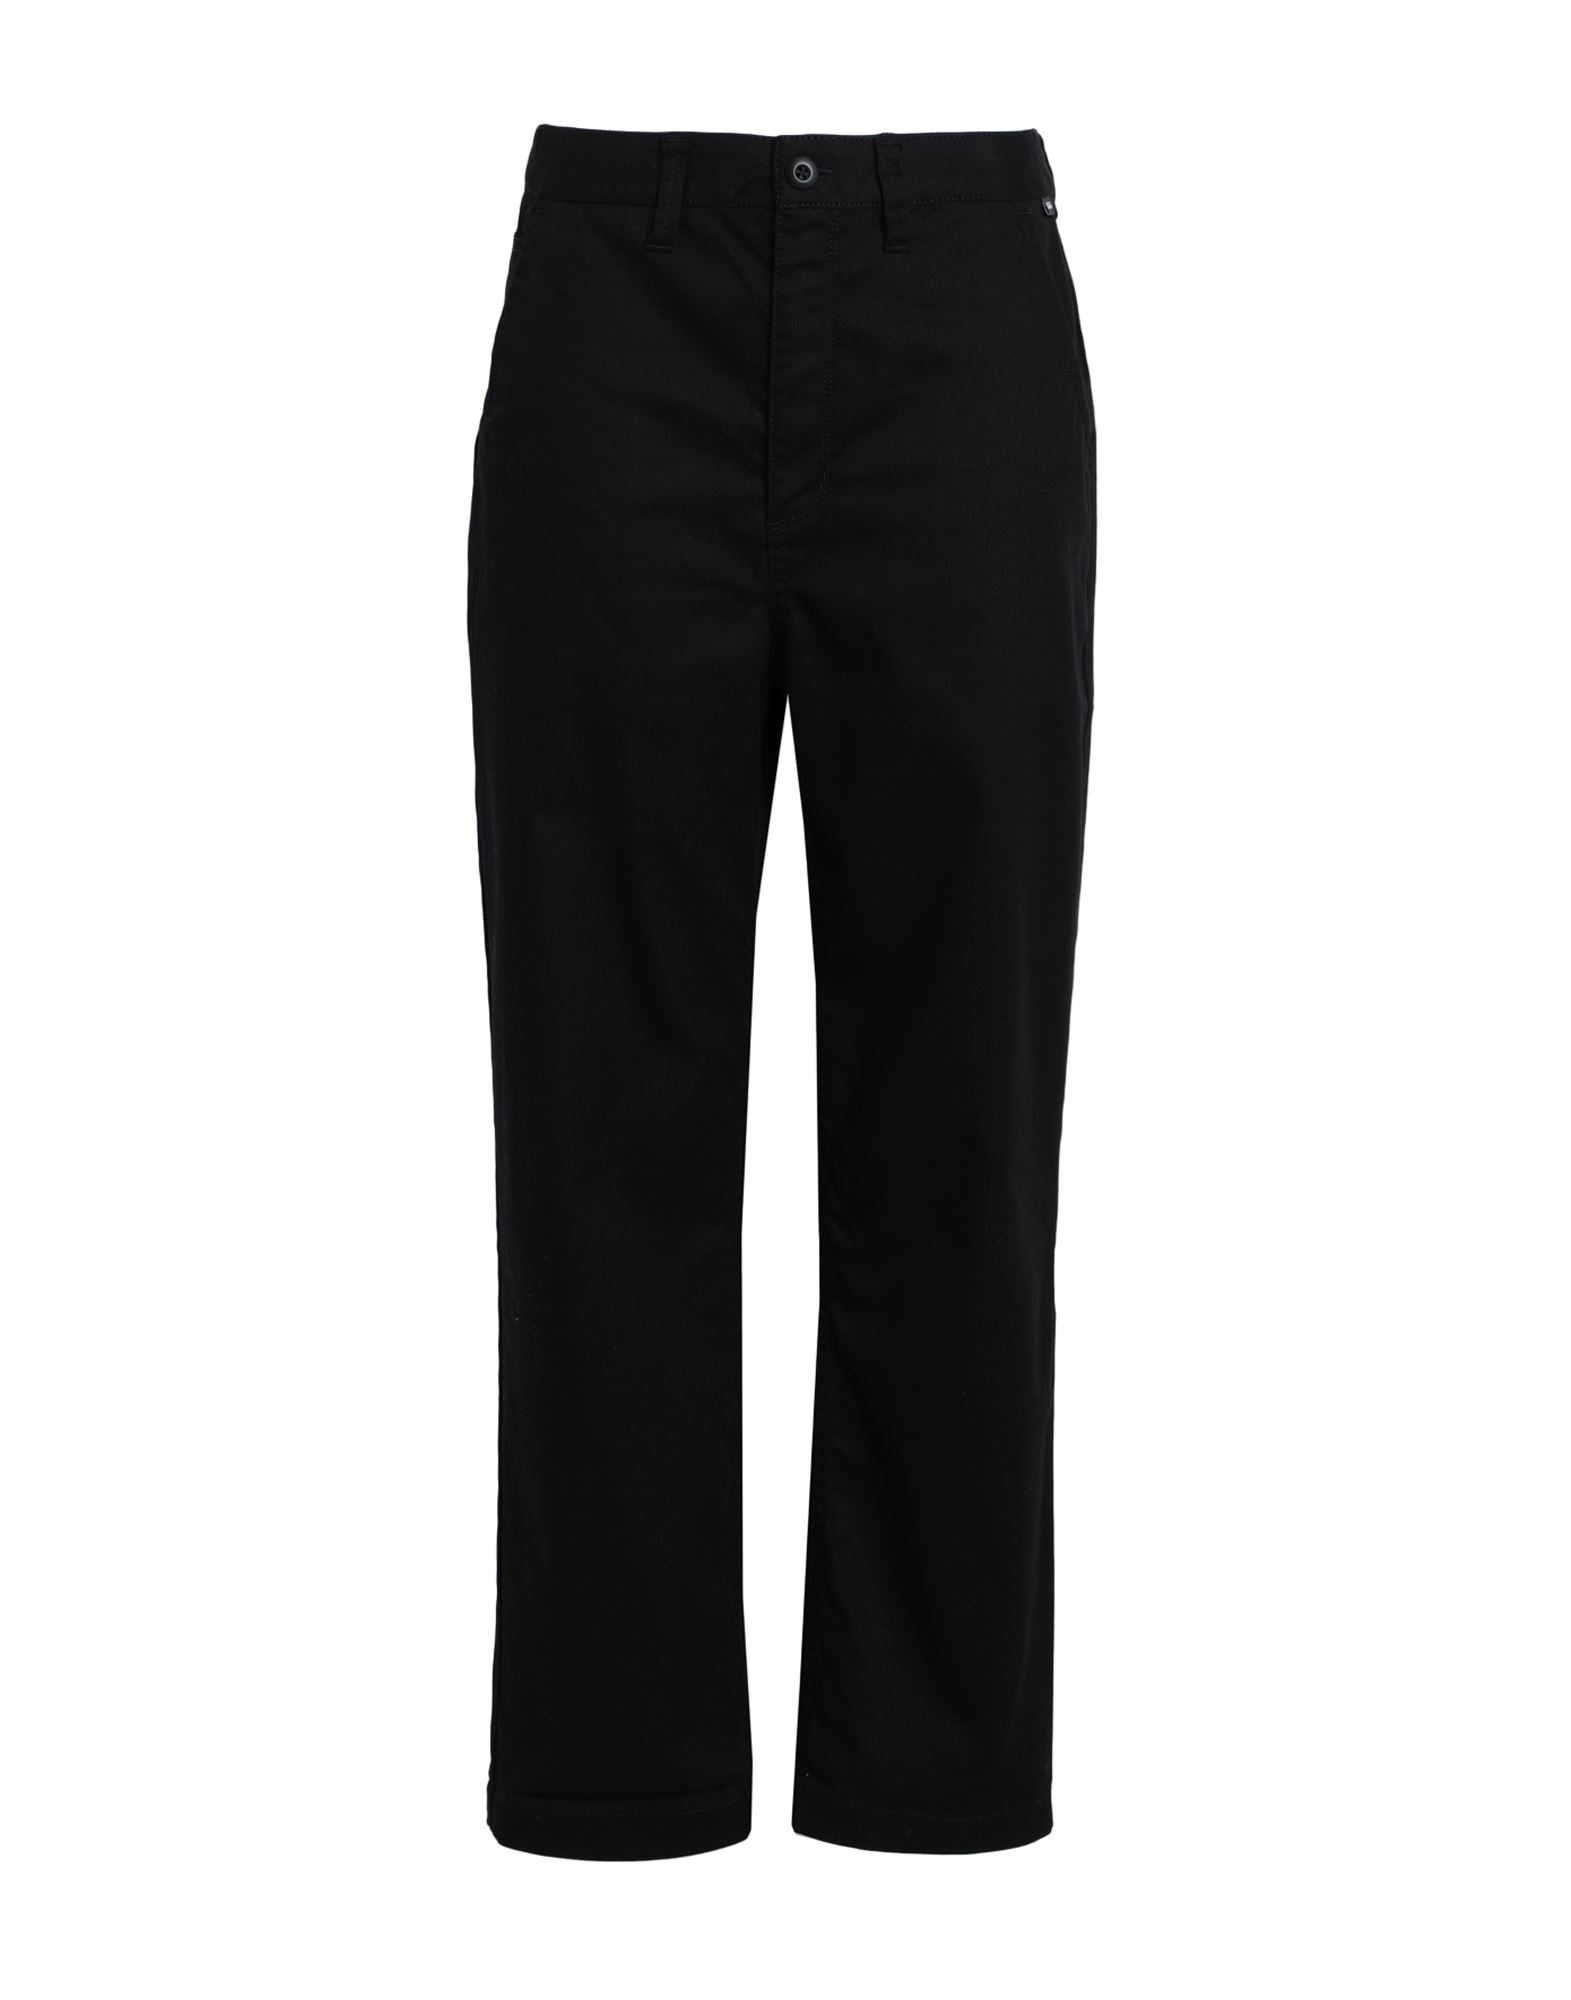 Vans Wm Authentic Wmn Chino Woman Pants Black Size 27 Cotton, Polyester, Elastane